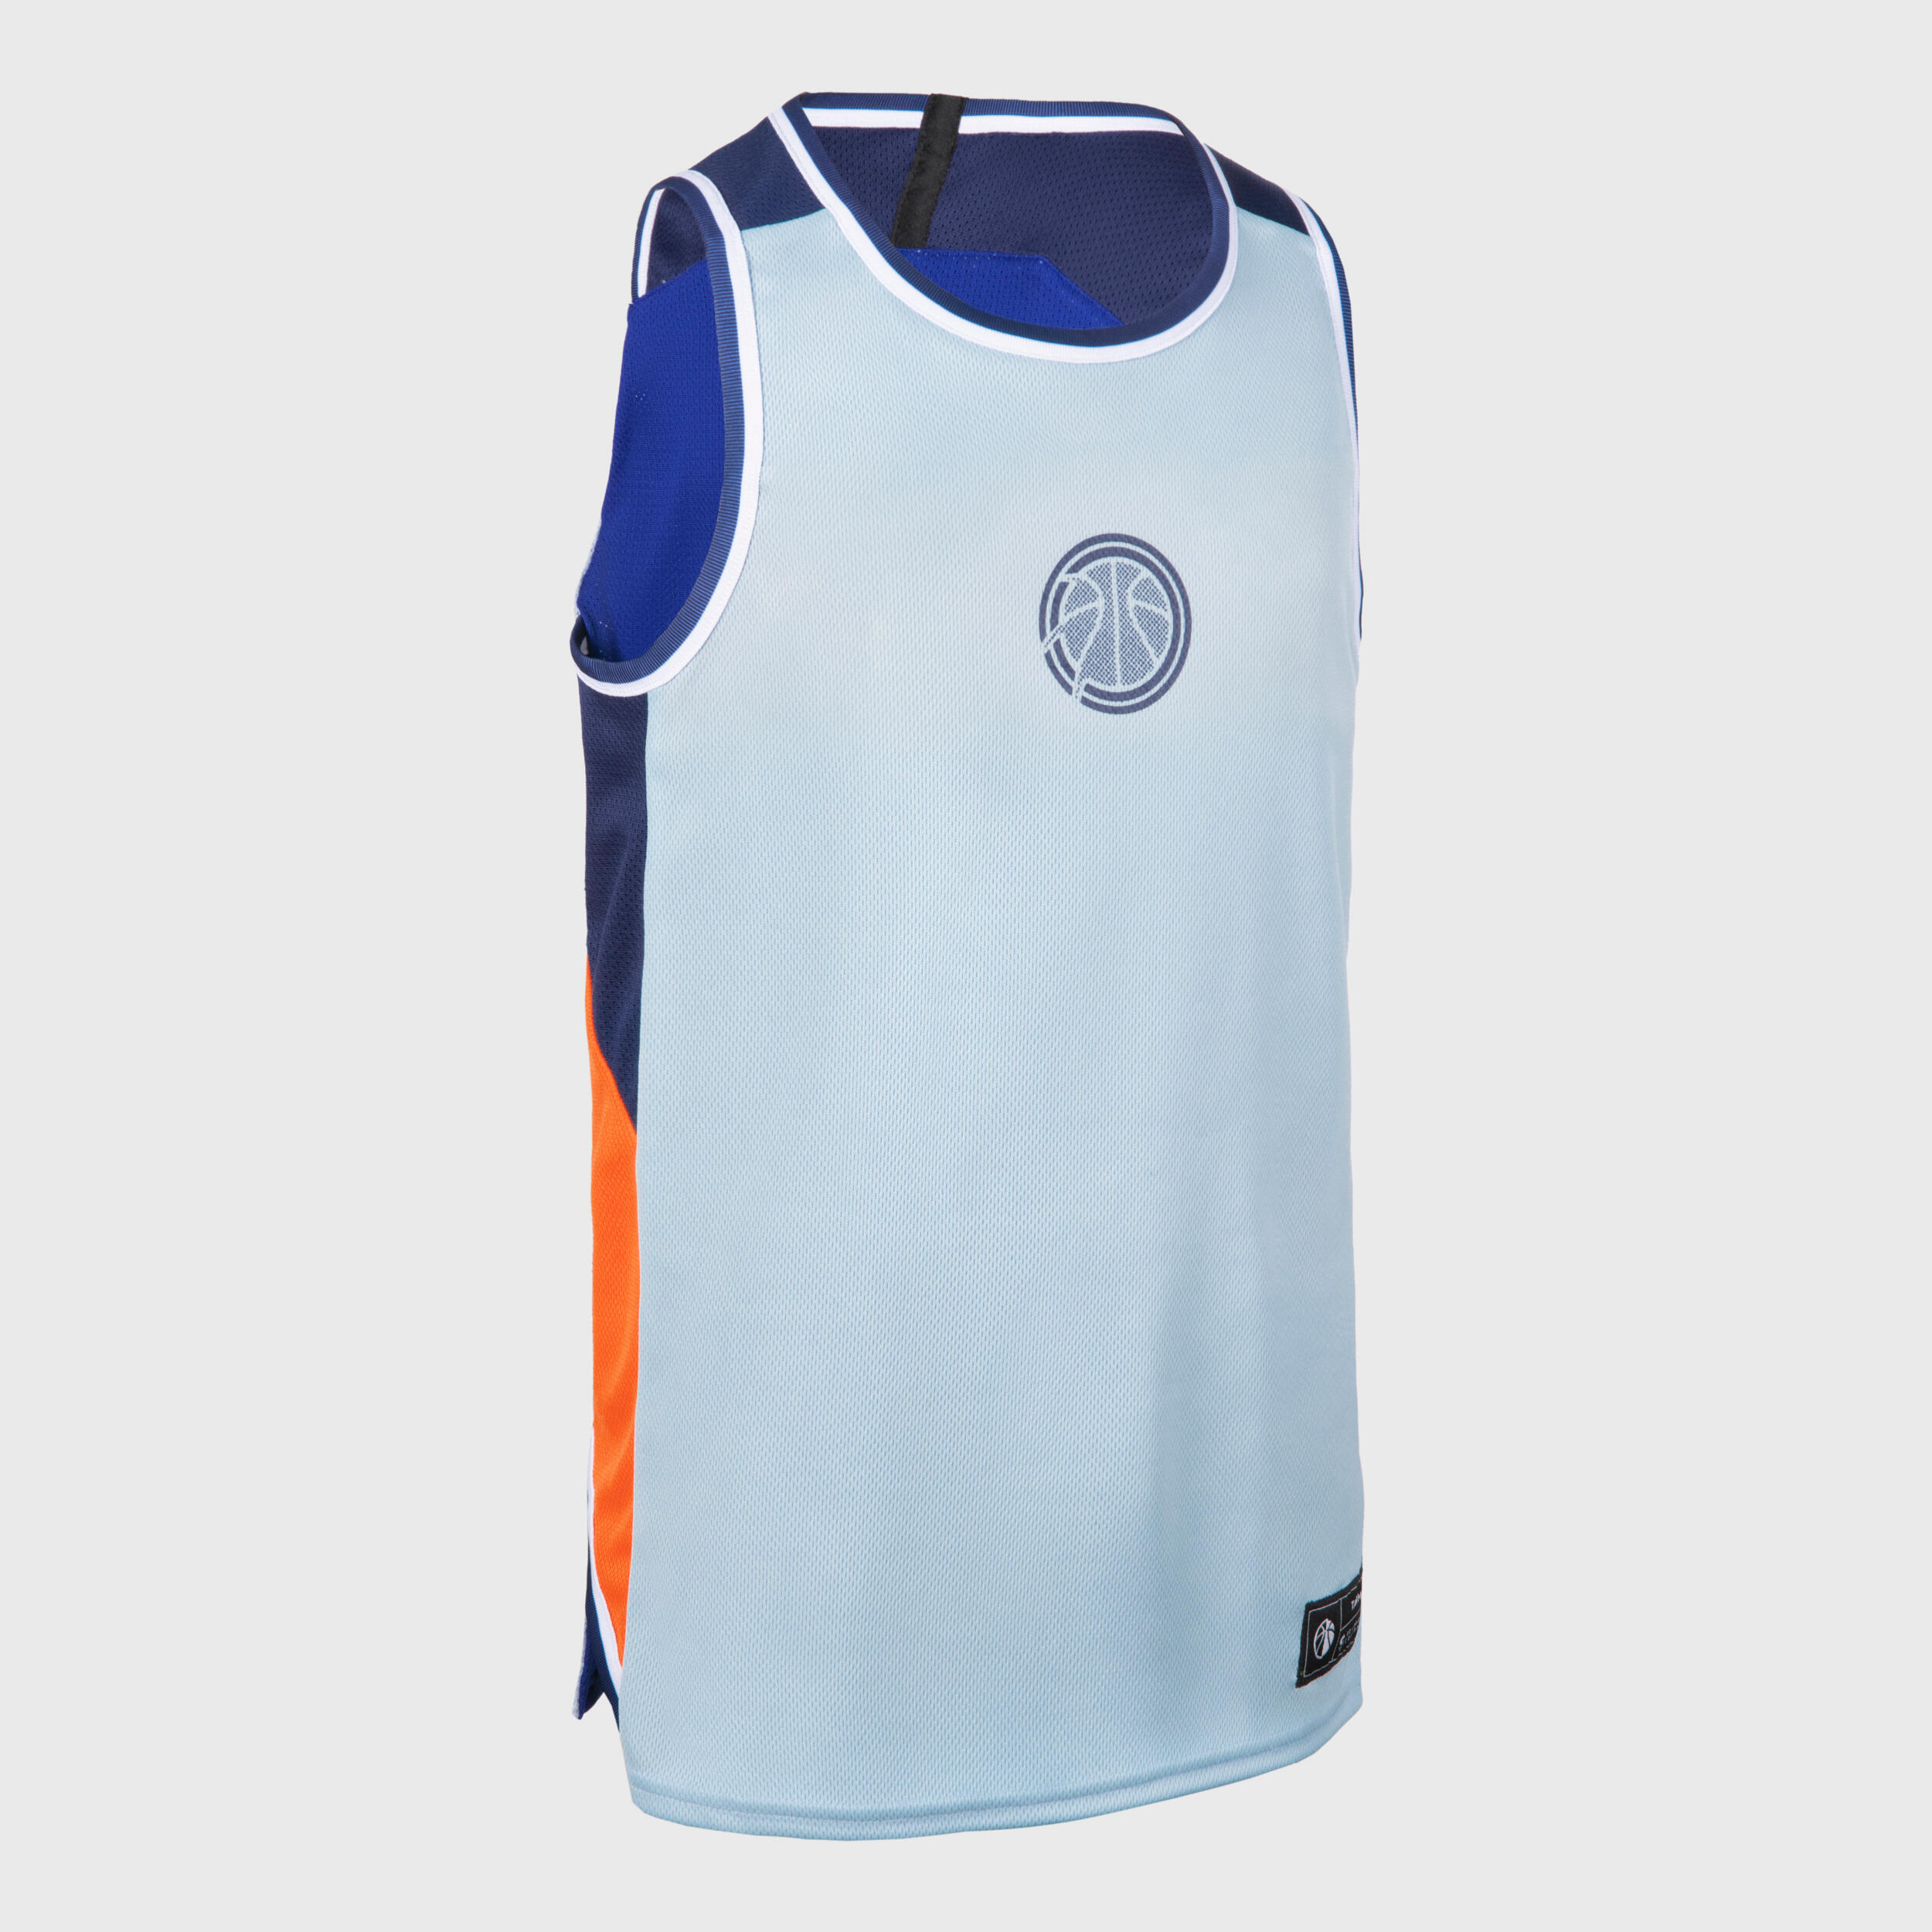 Kids' Reversible Sleeveless Basketball Jersey T500R - Light Blue/Dark Blue 9/11